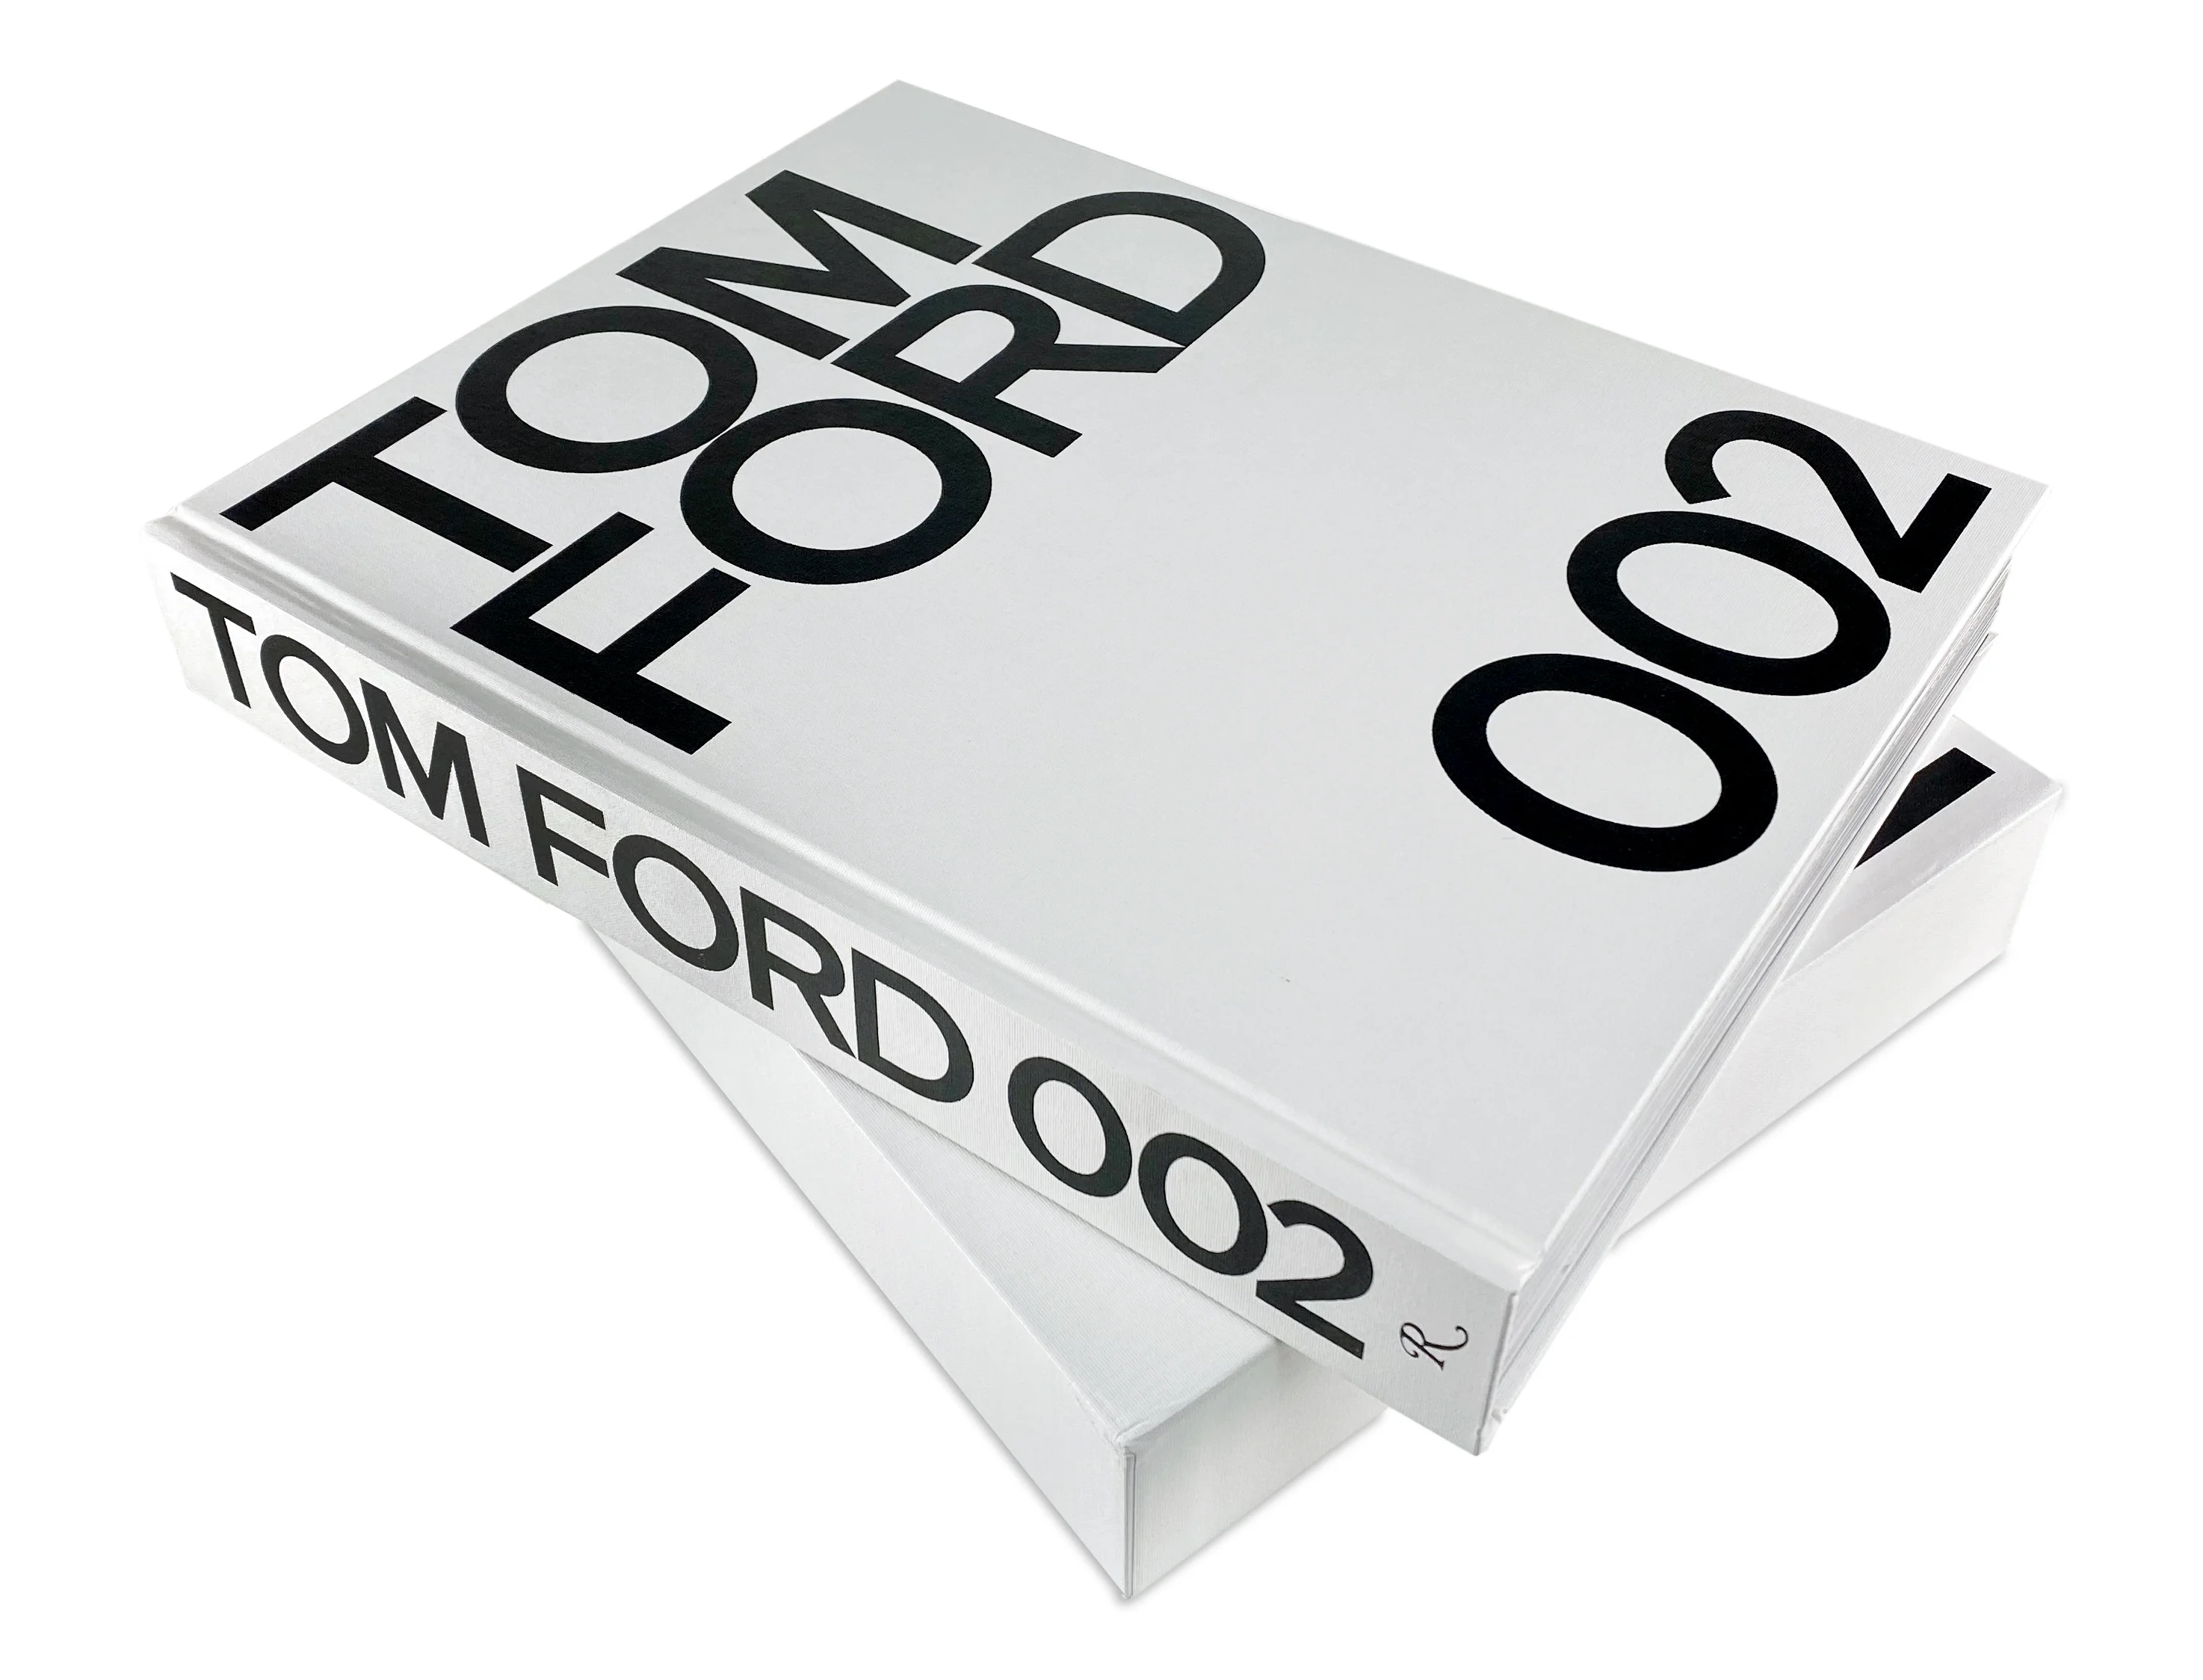 Rizzoli + ‘Tom Ford 002’ Book